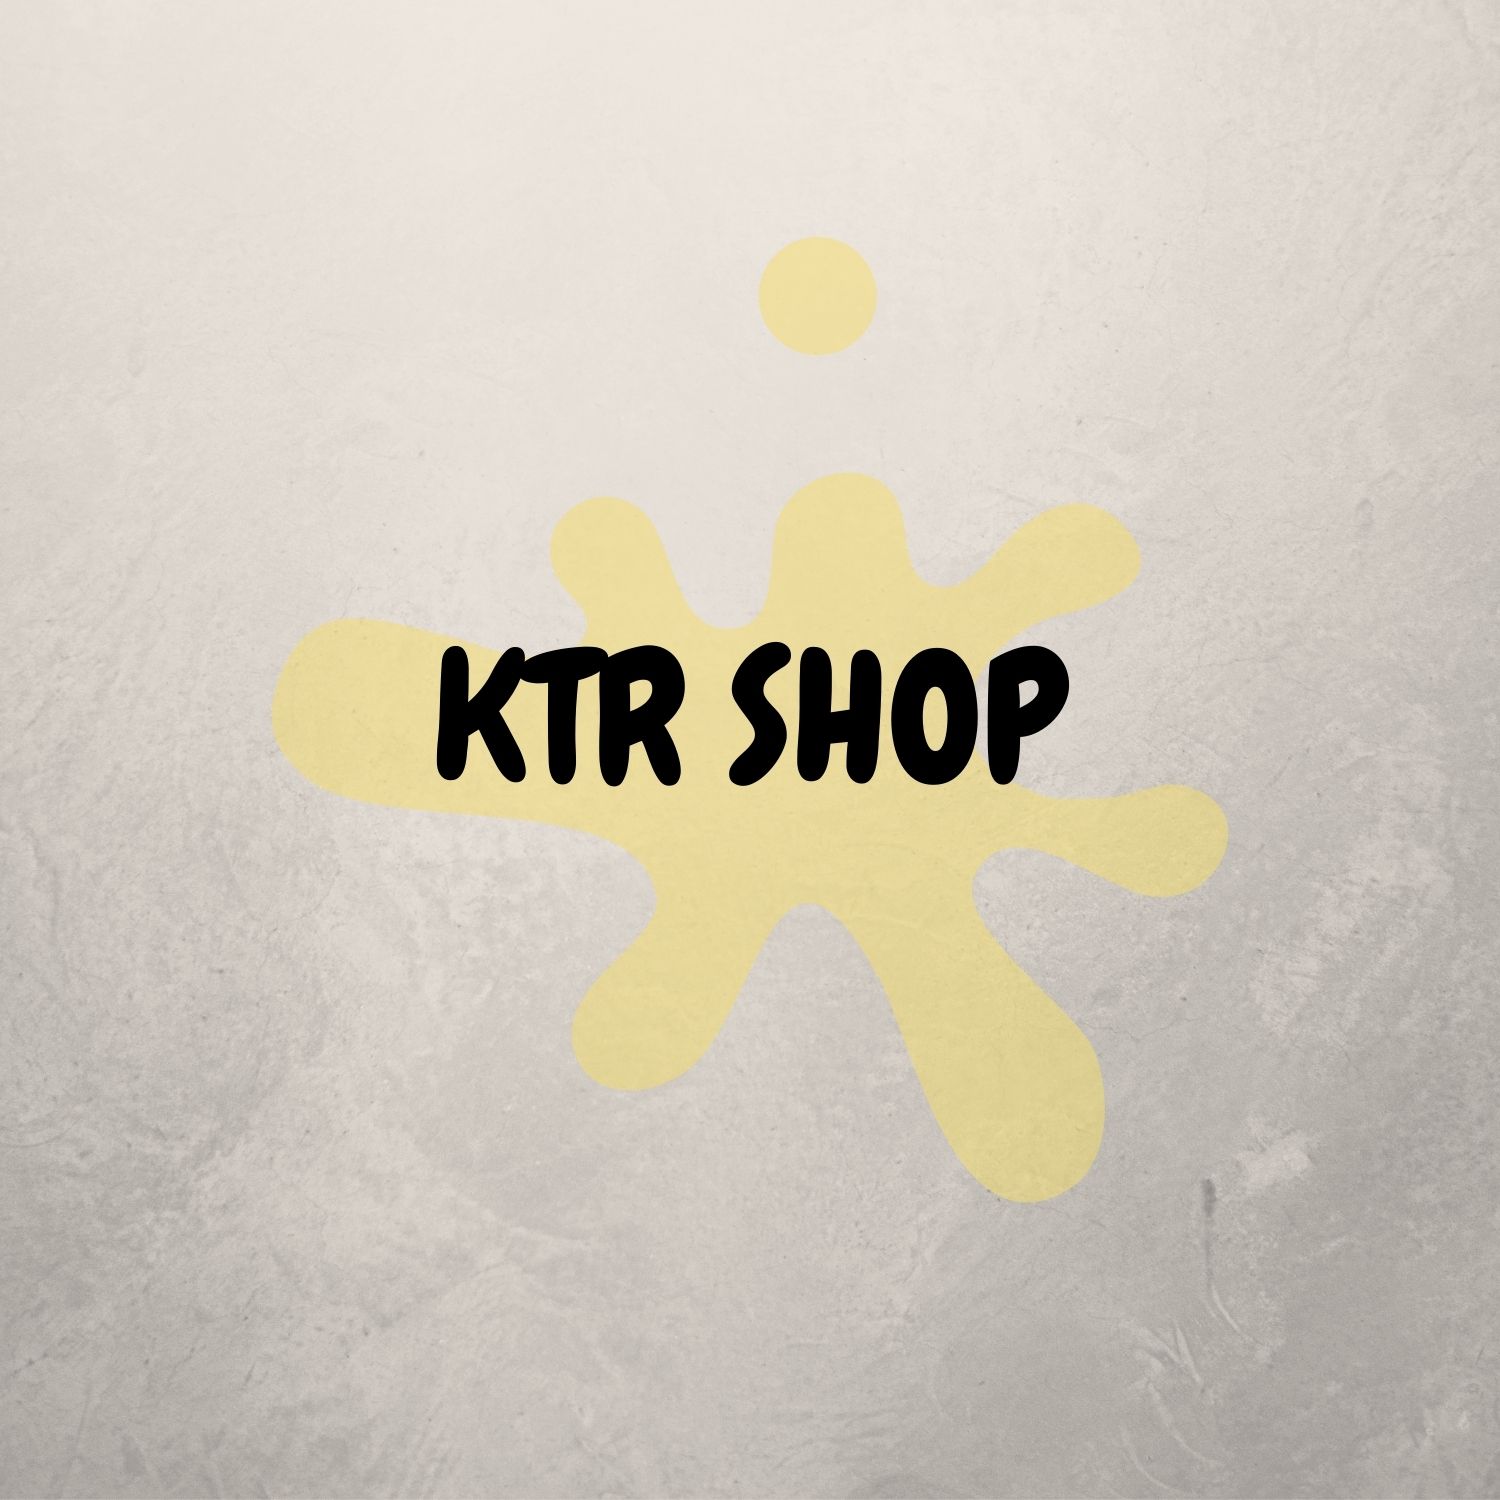 KTR shop